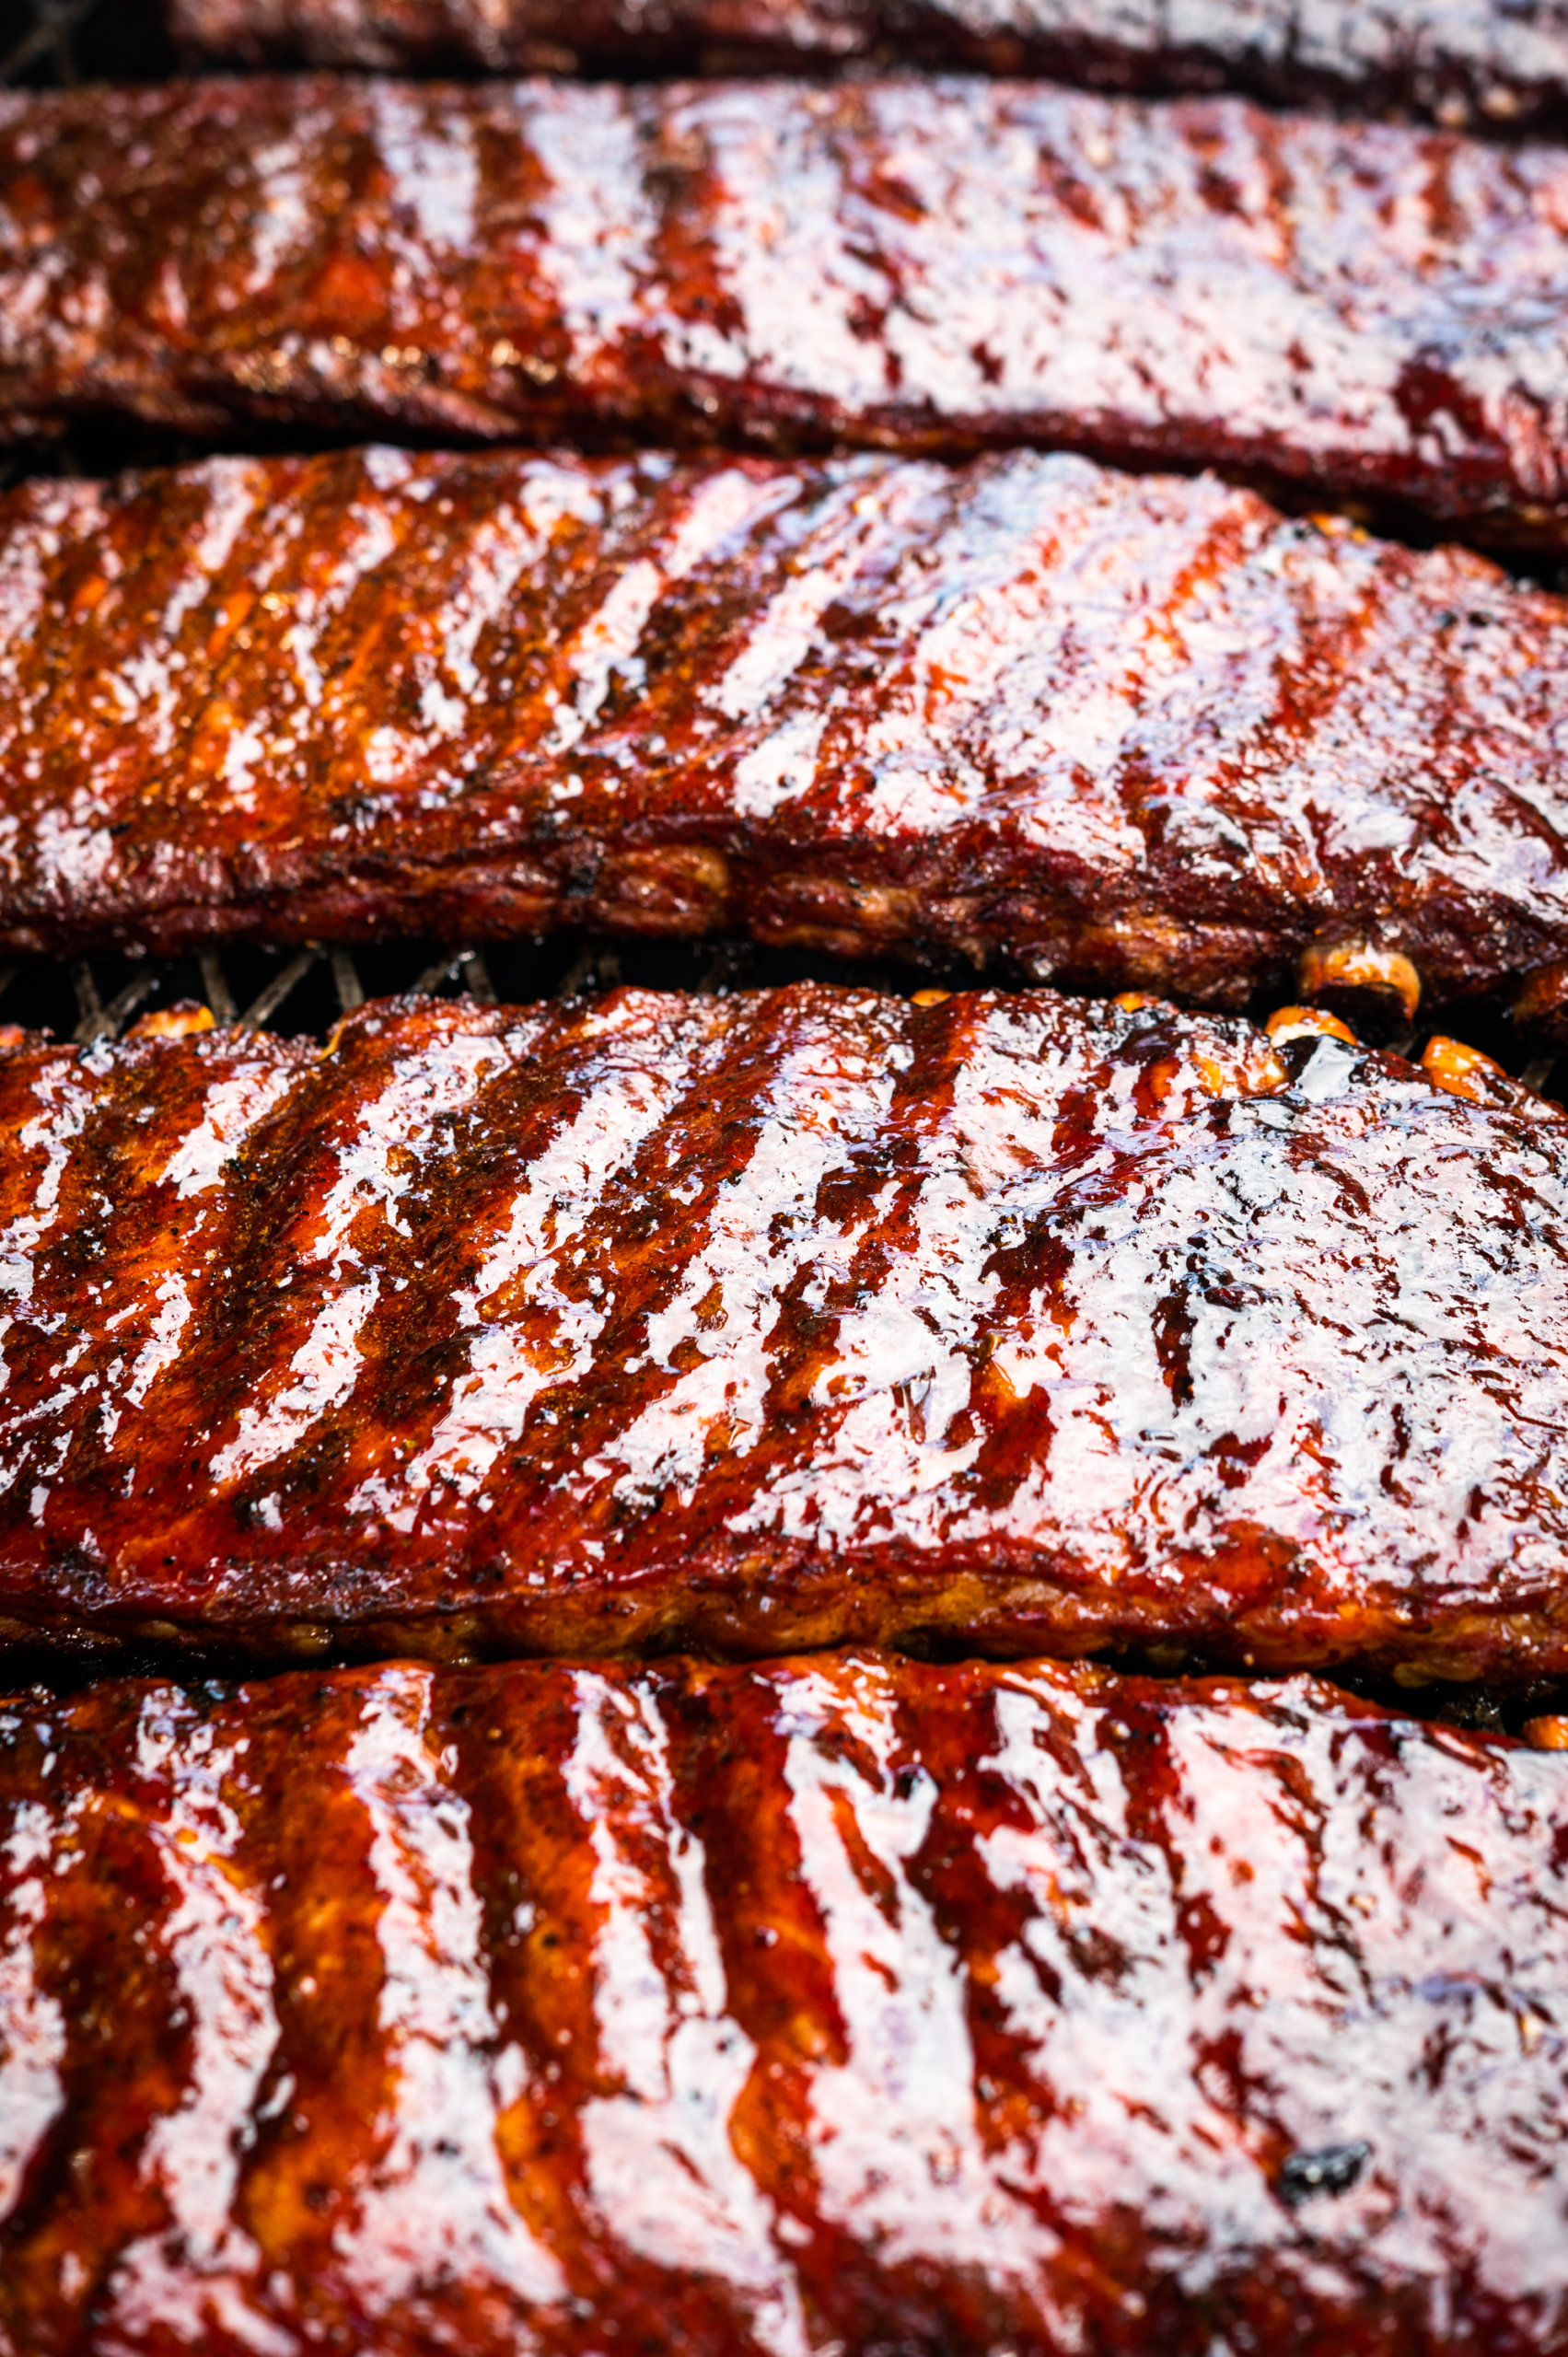 Racks of barbecued pork ribs